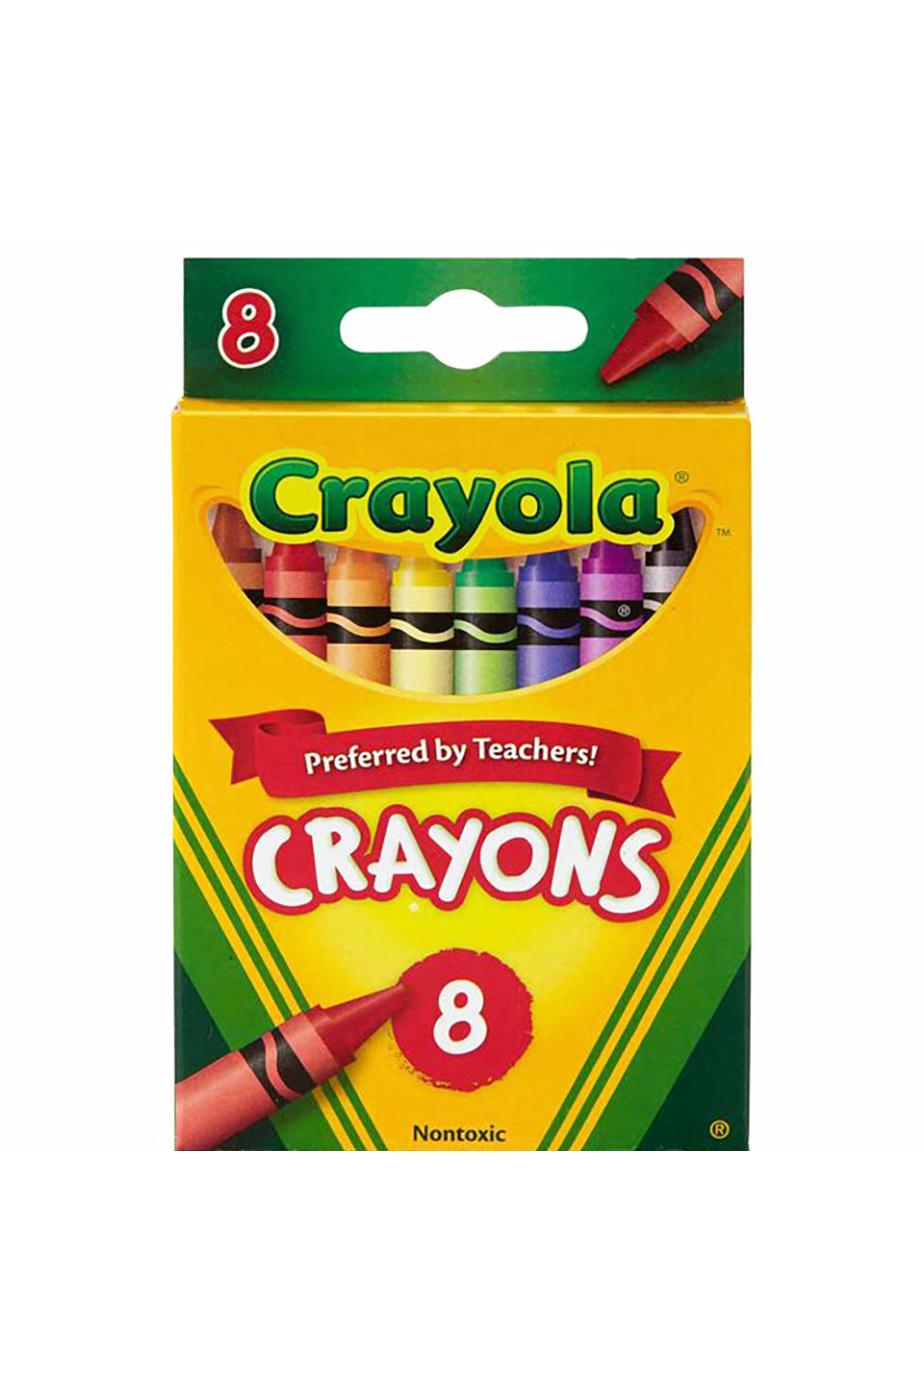 Crayola Crayons; image 1 of 2